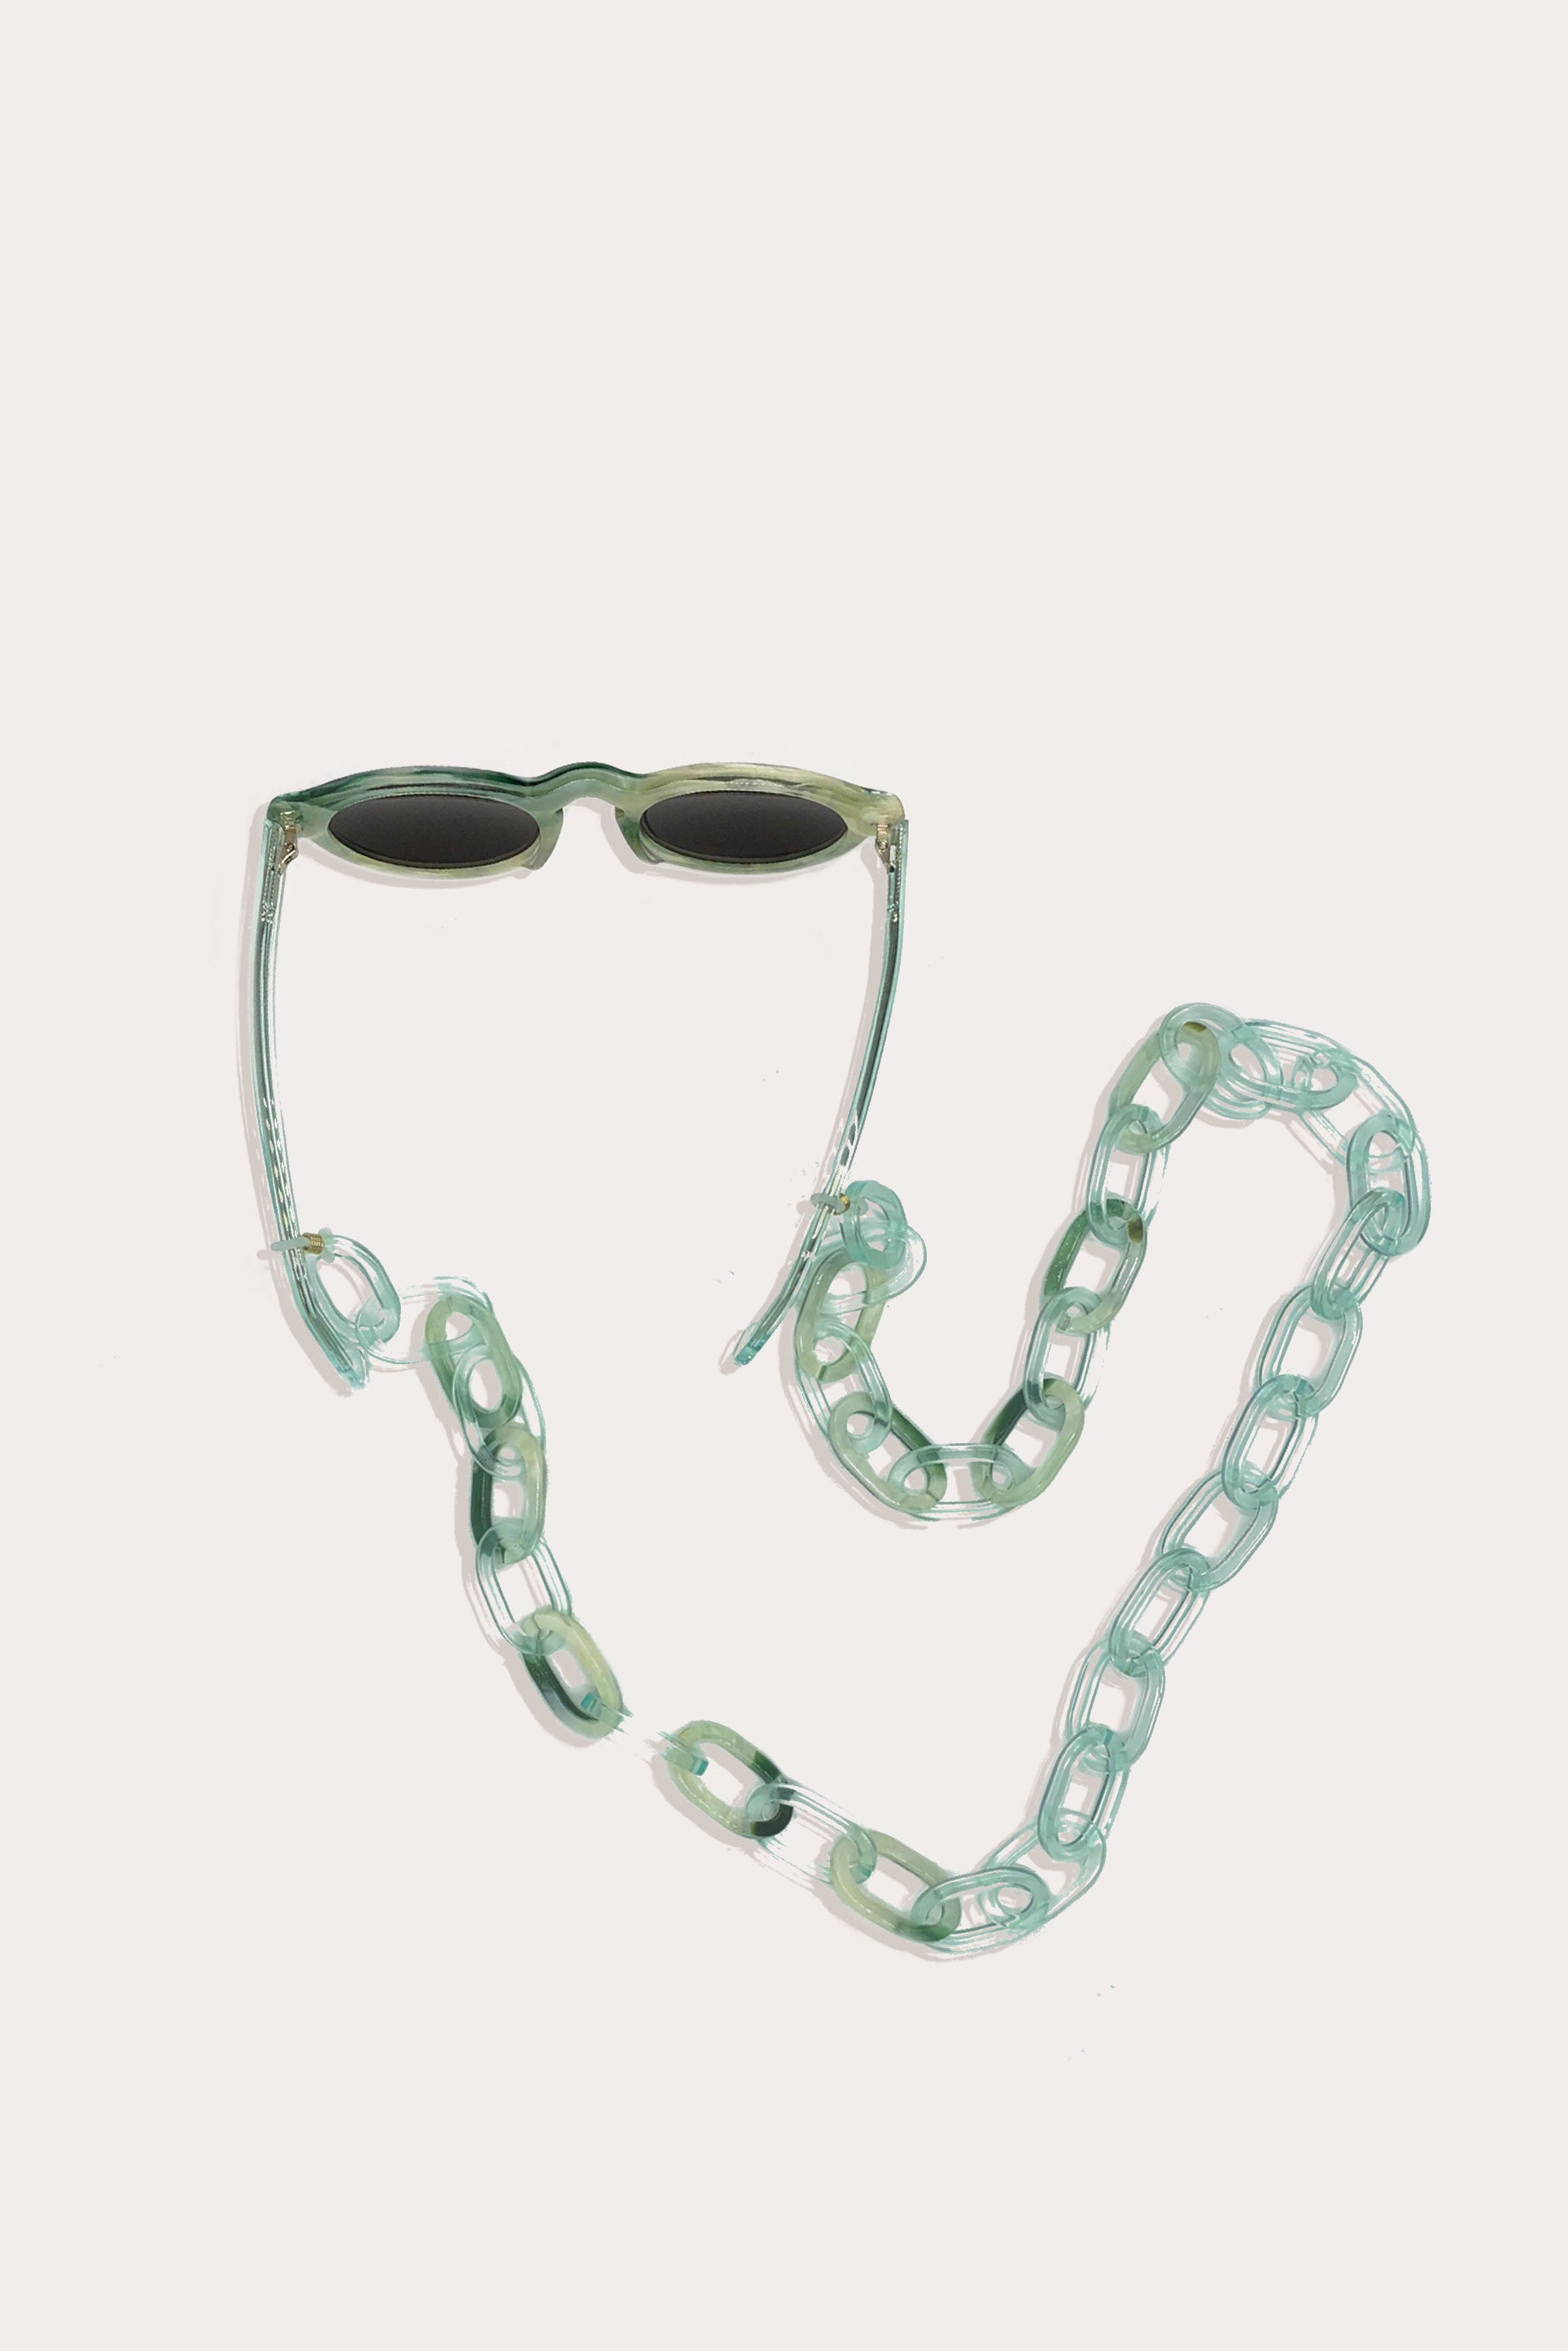 Sunglasses Chain - Glasses Holder - Amethyst and Blue Onyx - Lavetelier